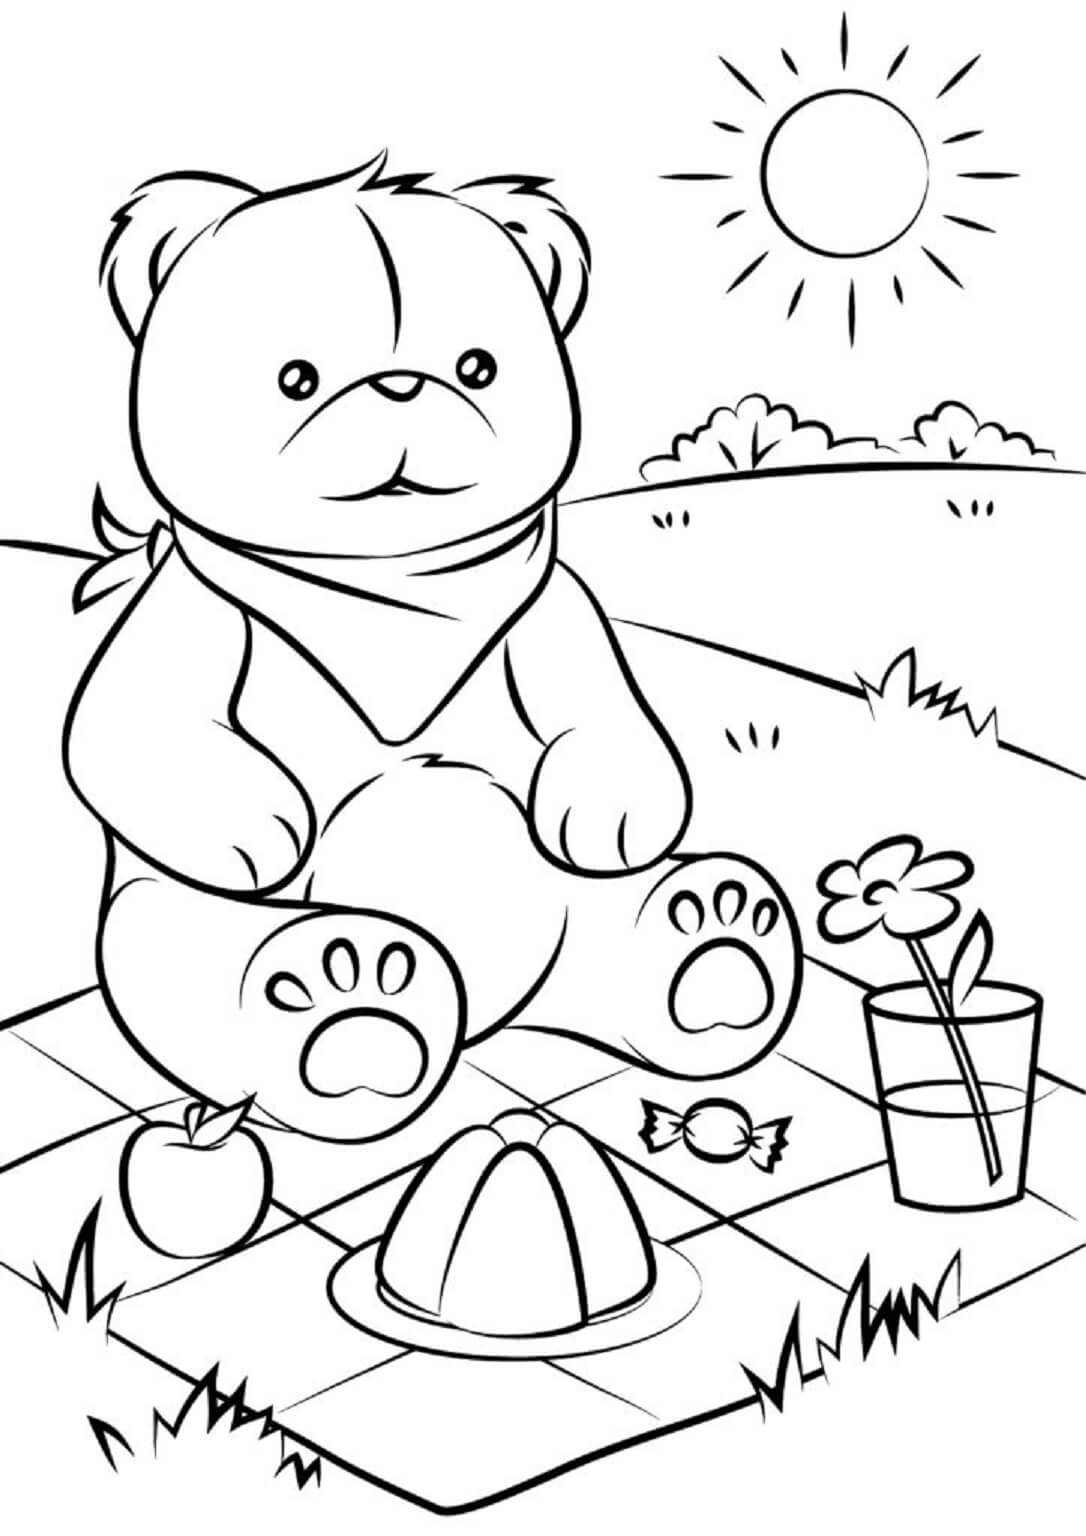 Bären im Picknick